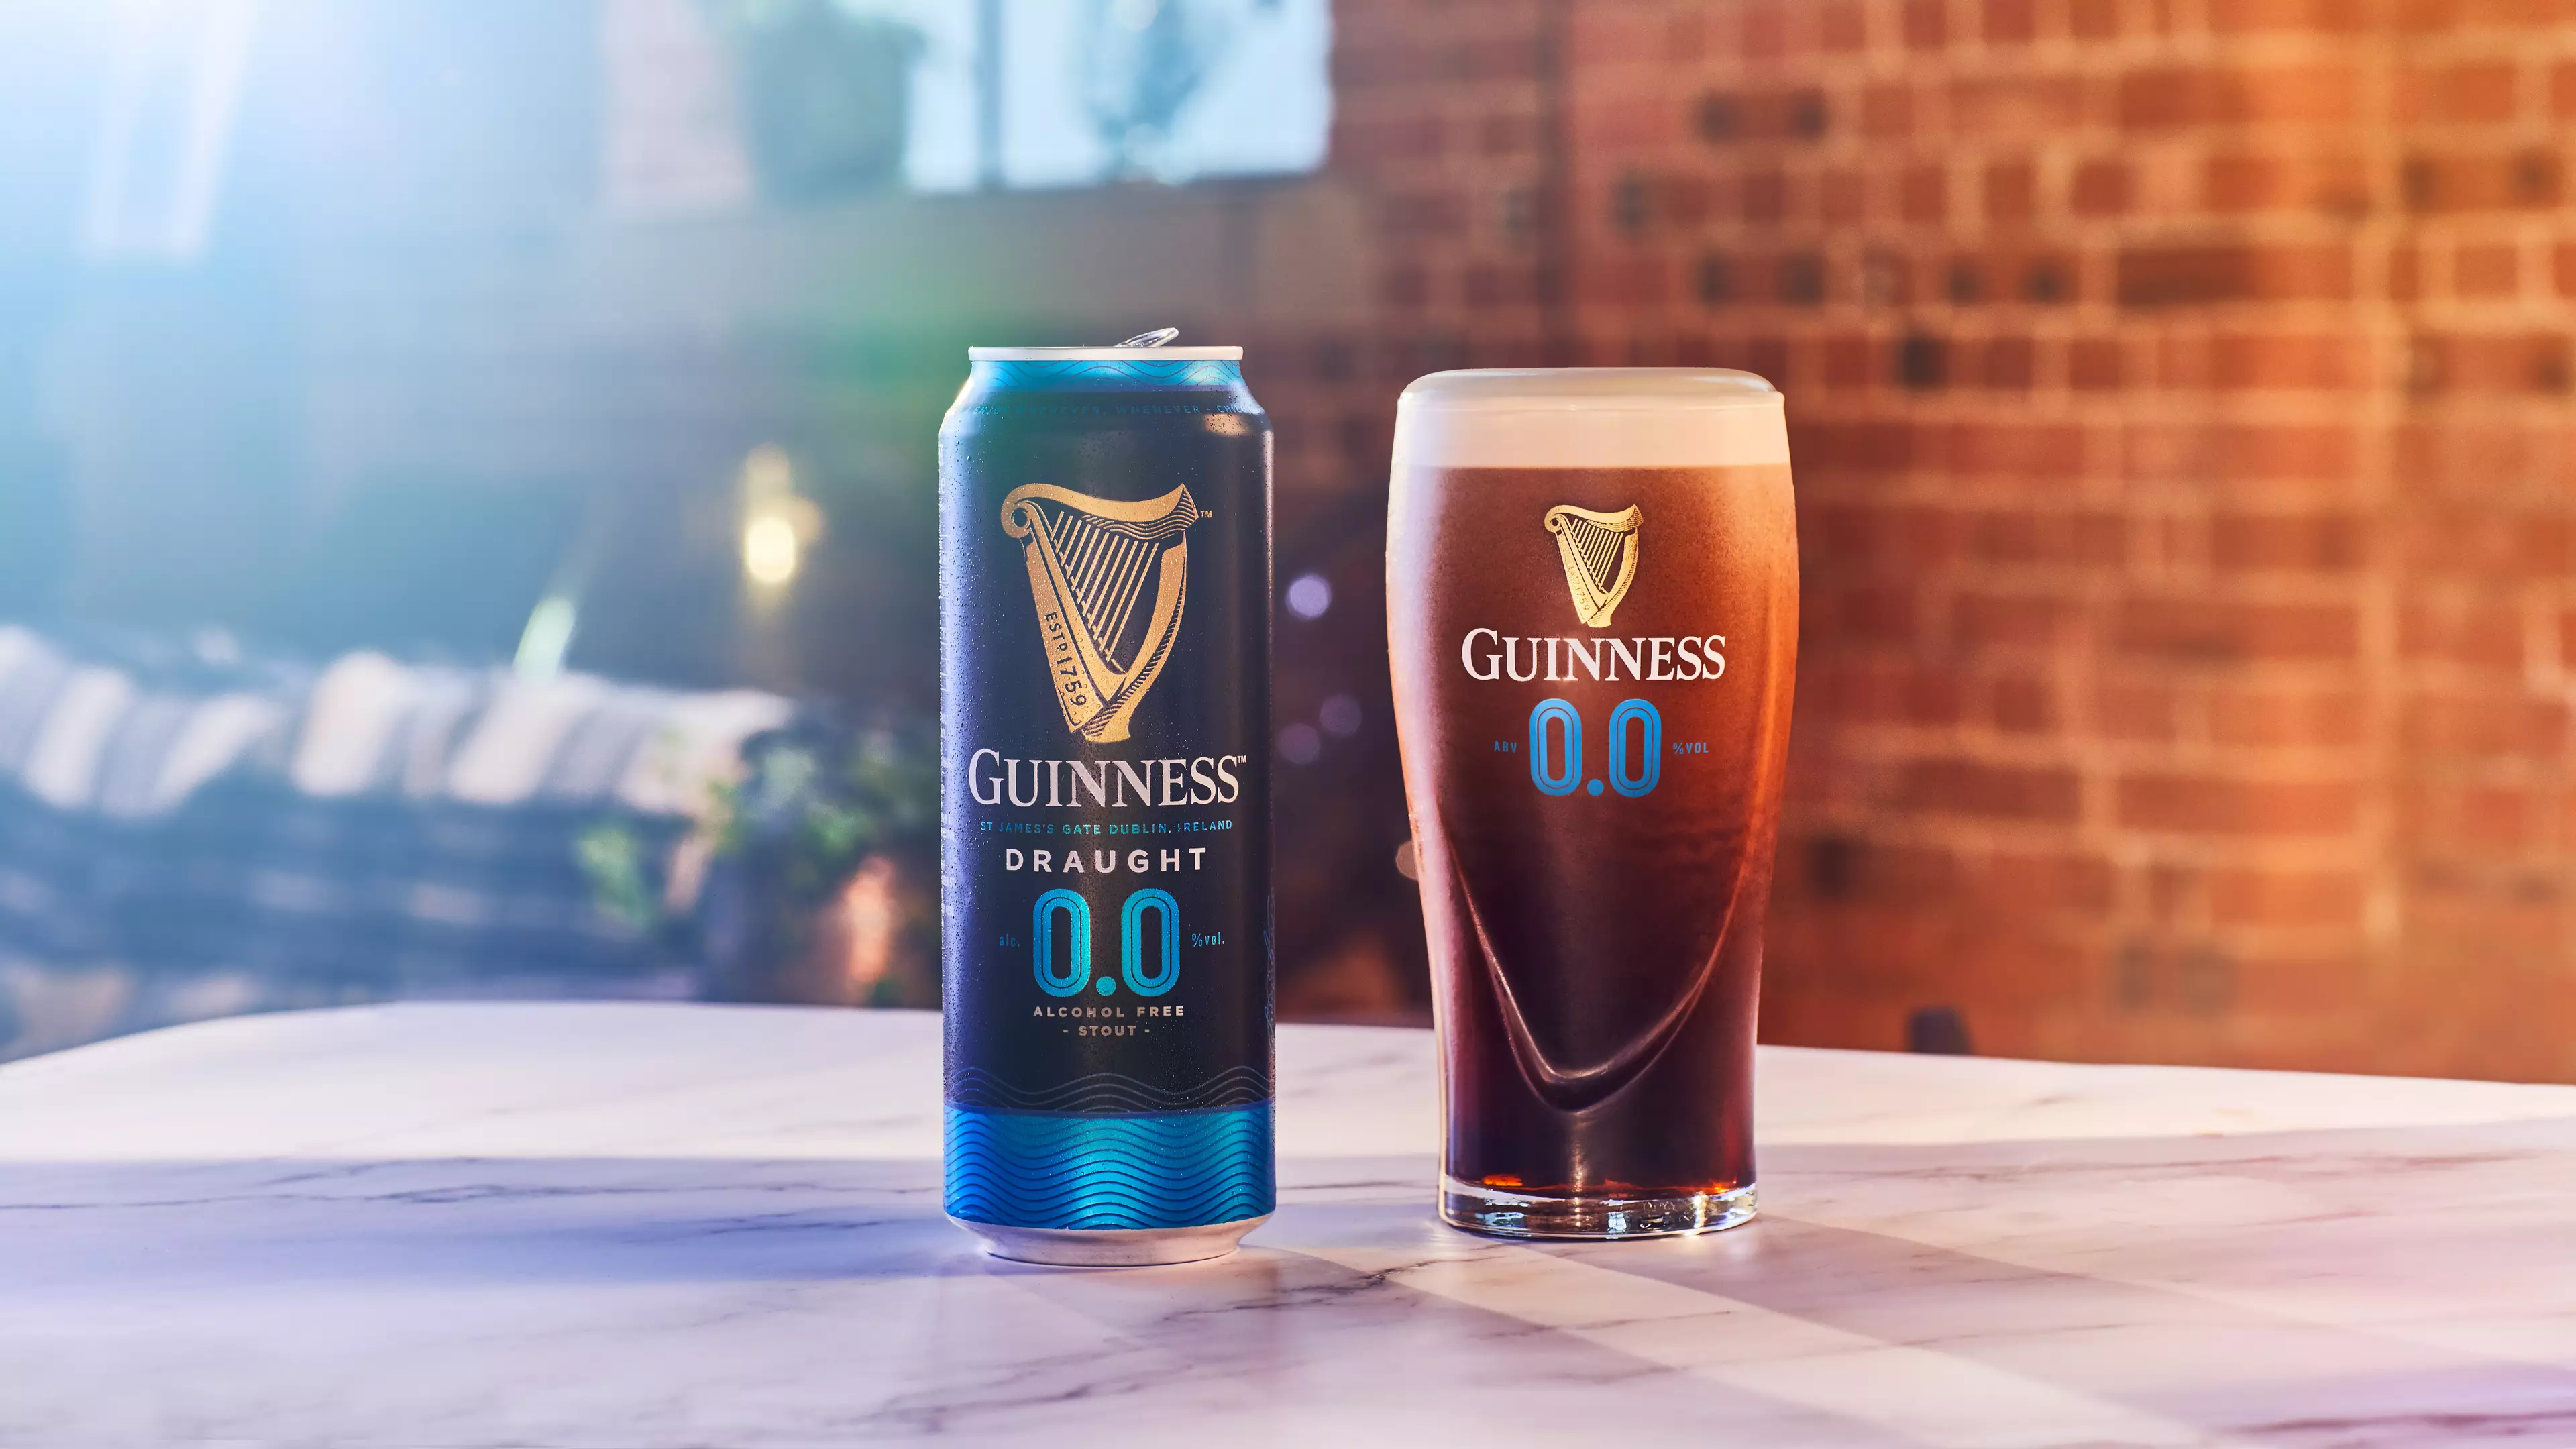 Guinness 0.0% Drink Is Back On The Shelves